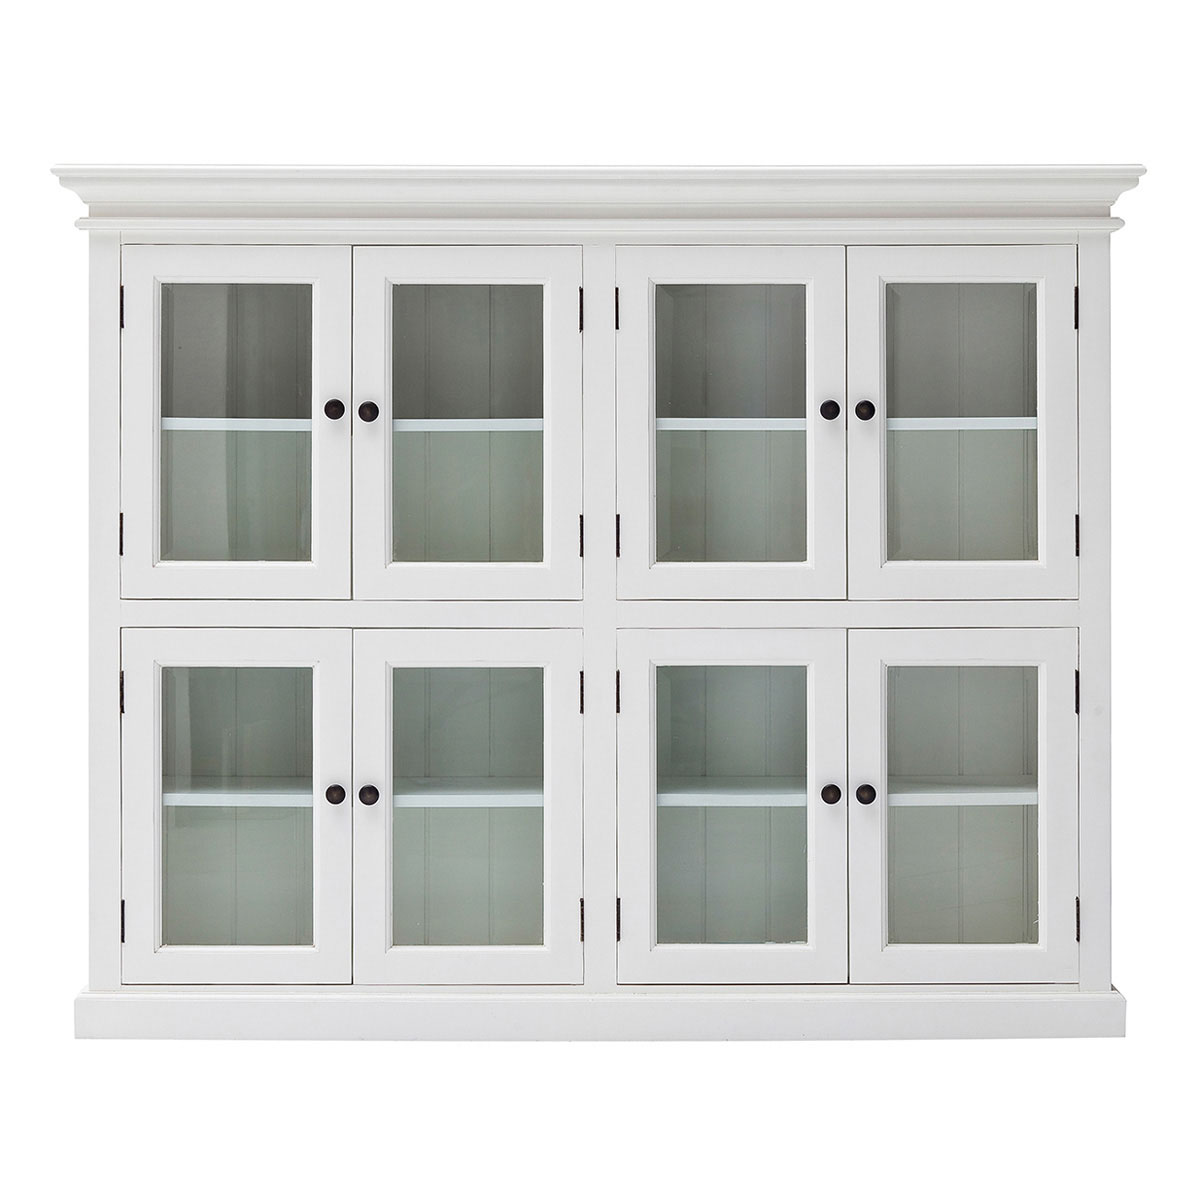 NovaSolo Halifax Pantry 8 Doors in Classic White